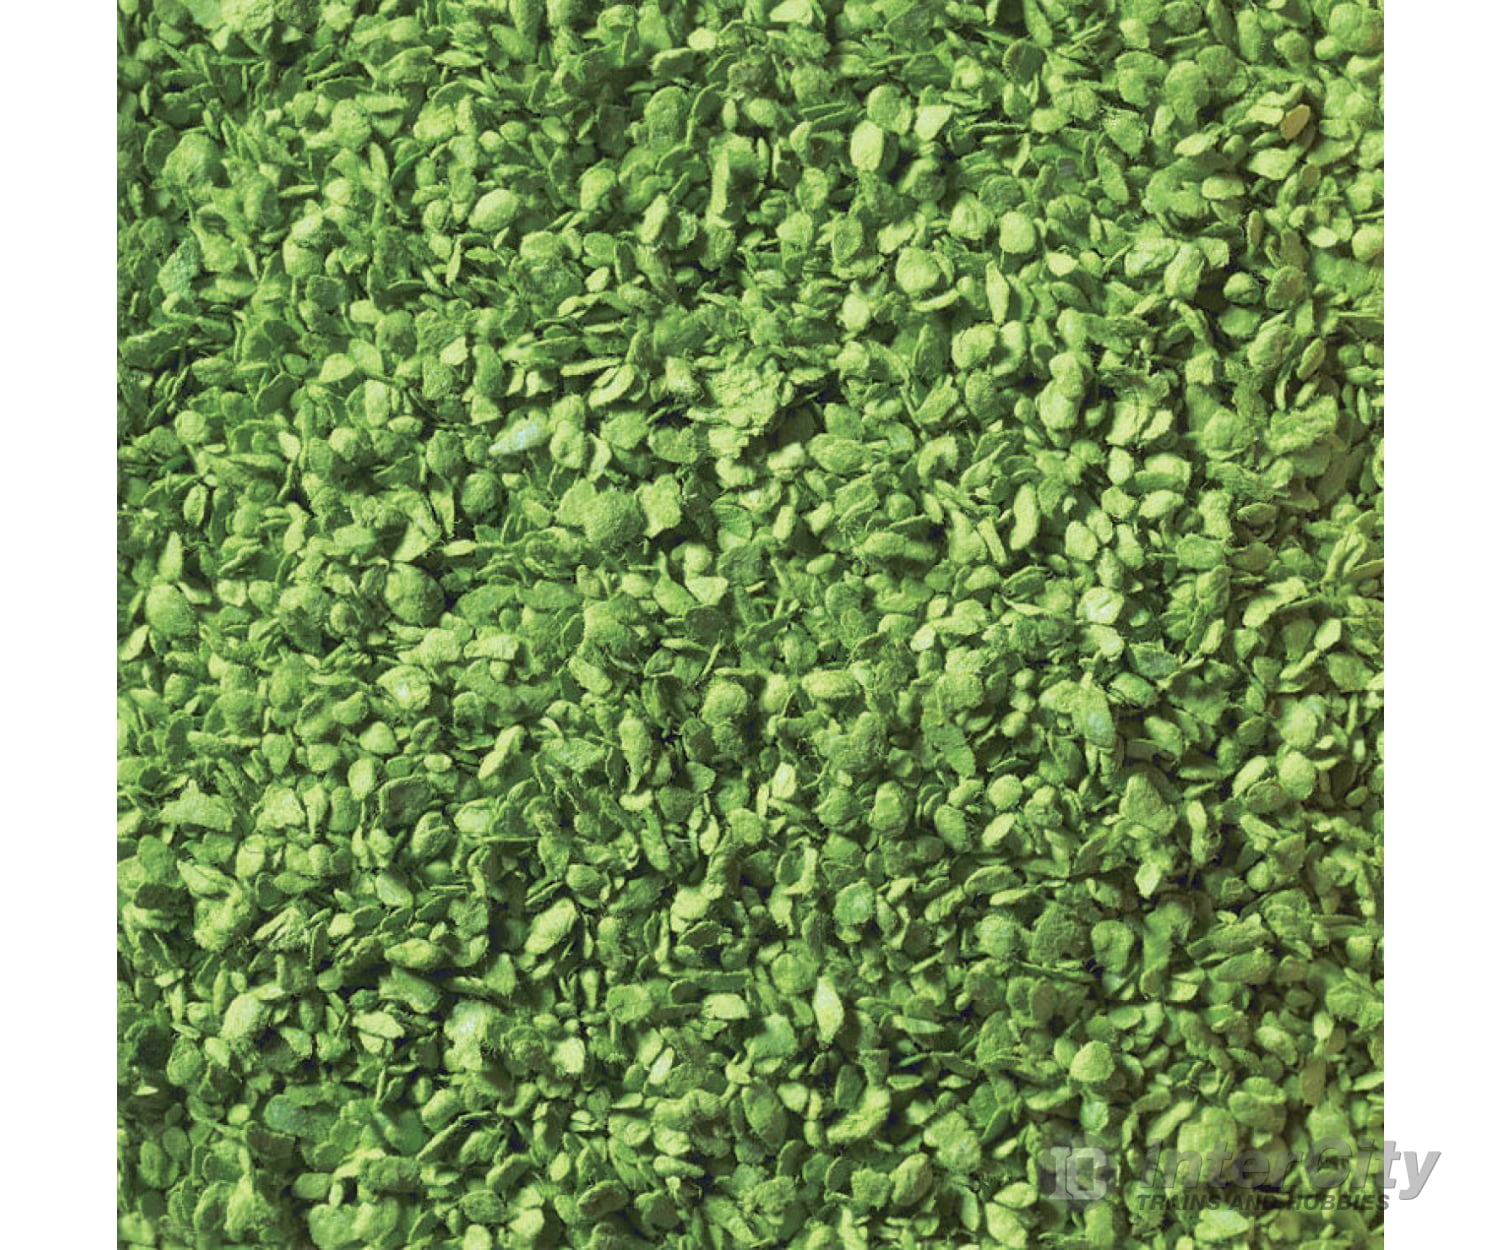 Walthers Scenemaster 1207 Leaves Ground Cover - - Medium Green Flock & Turf